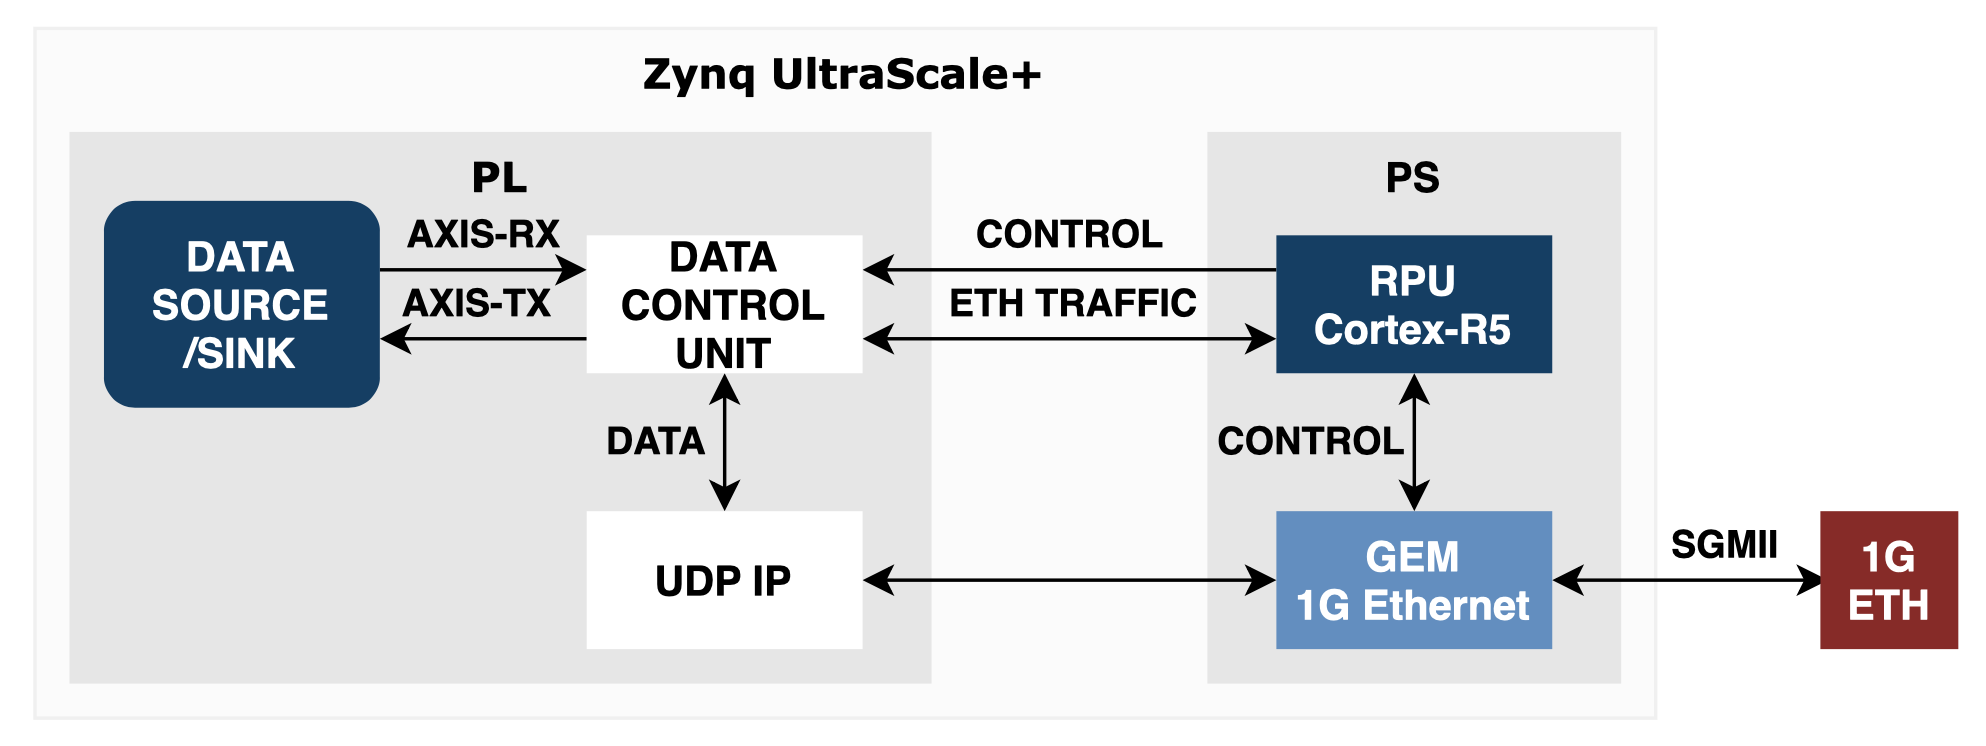 zynqus+ networking 1G rpu cortex-r5 udp